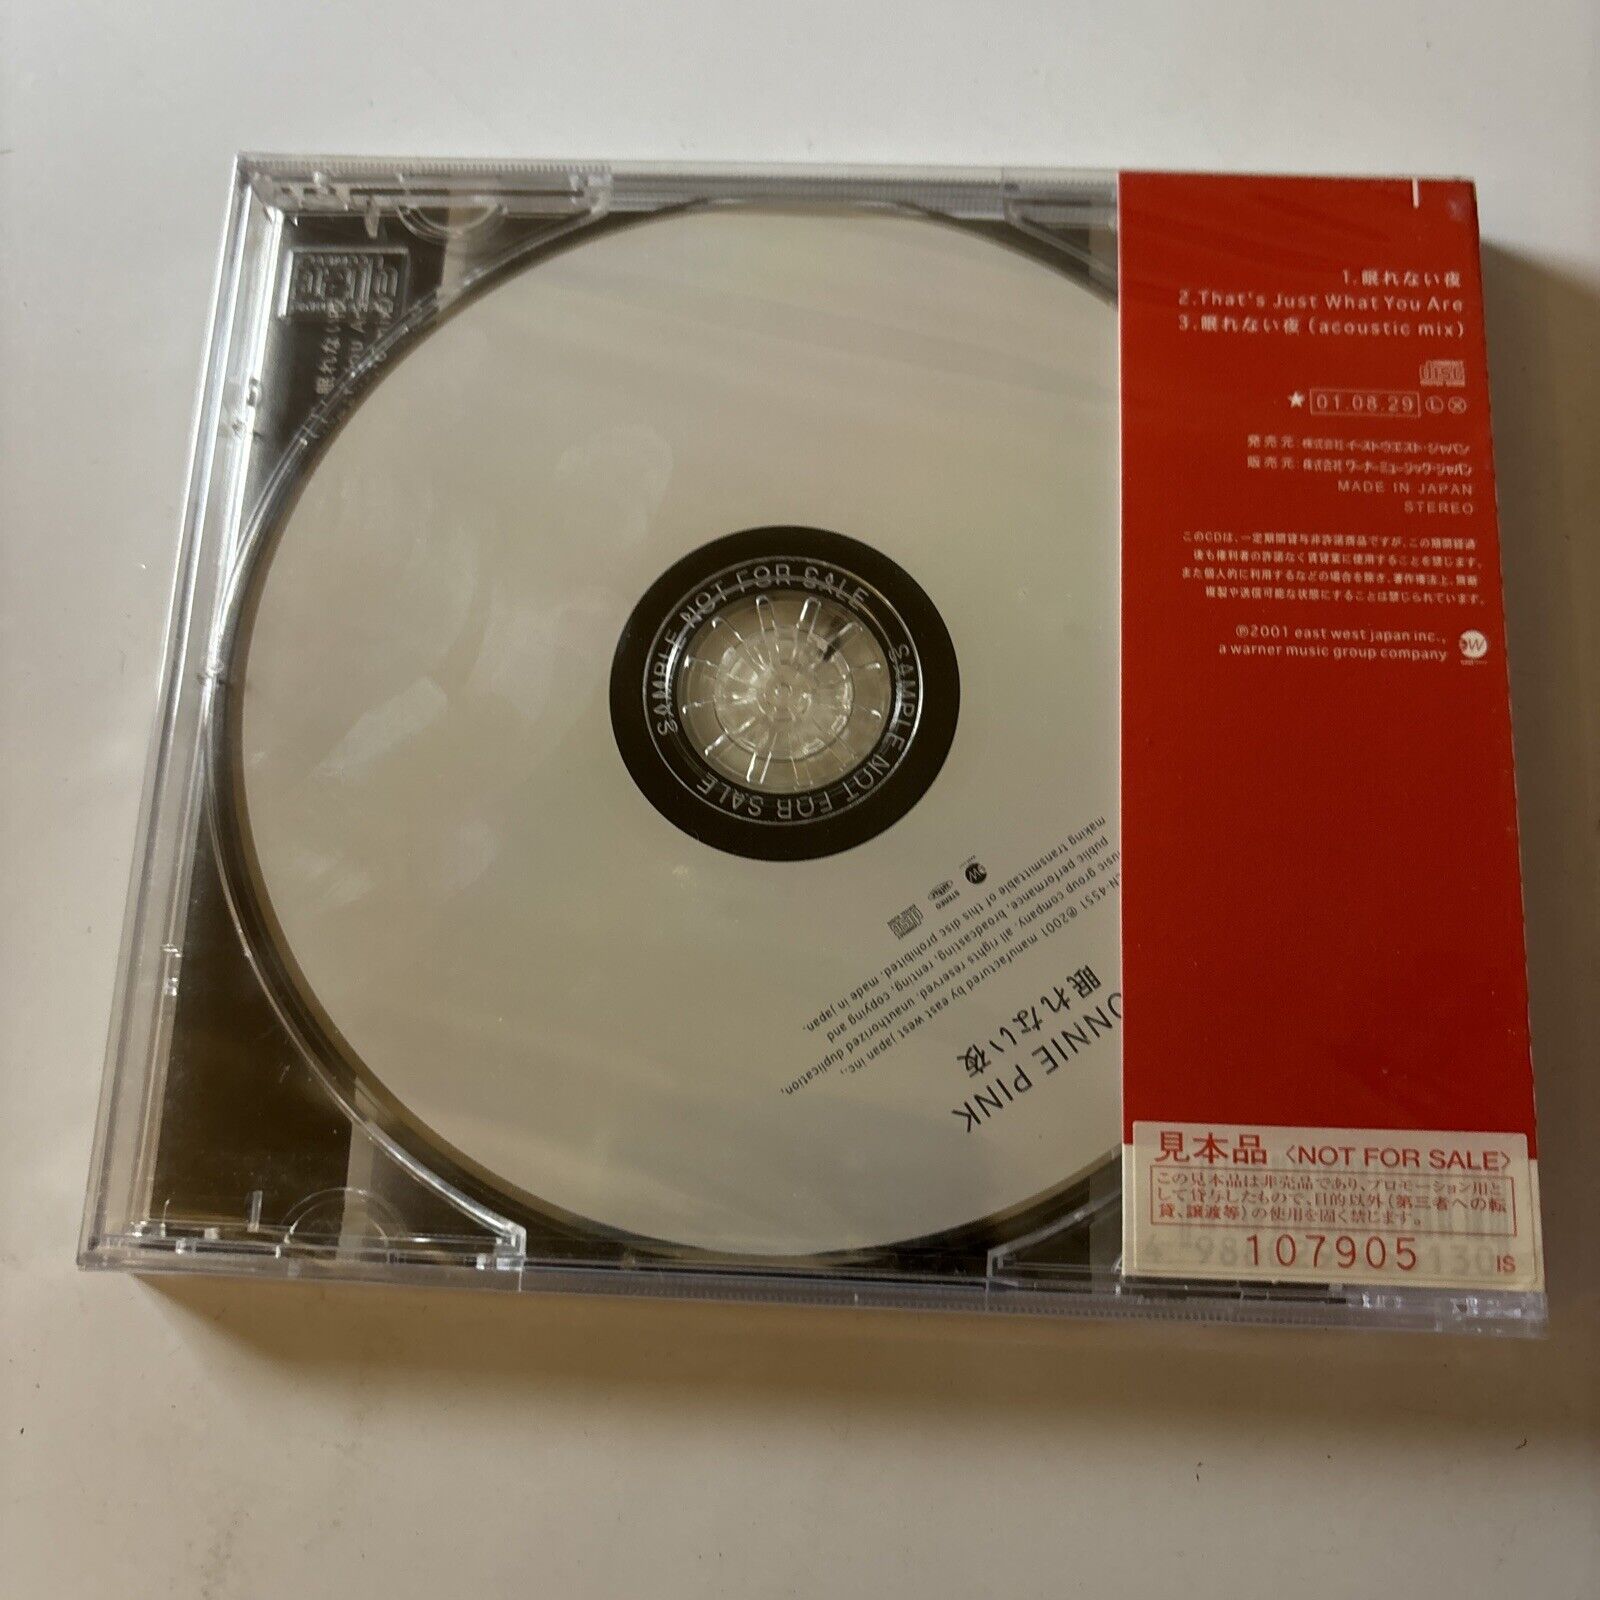 Bonnie Pink 眠れない夜 (CD, 2001) *New Sealed* Japan Obi Amcn-4551 